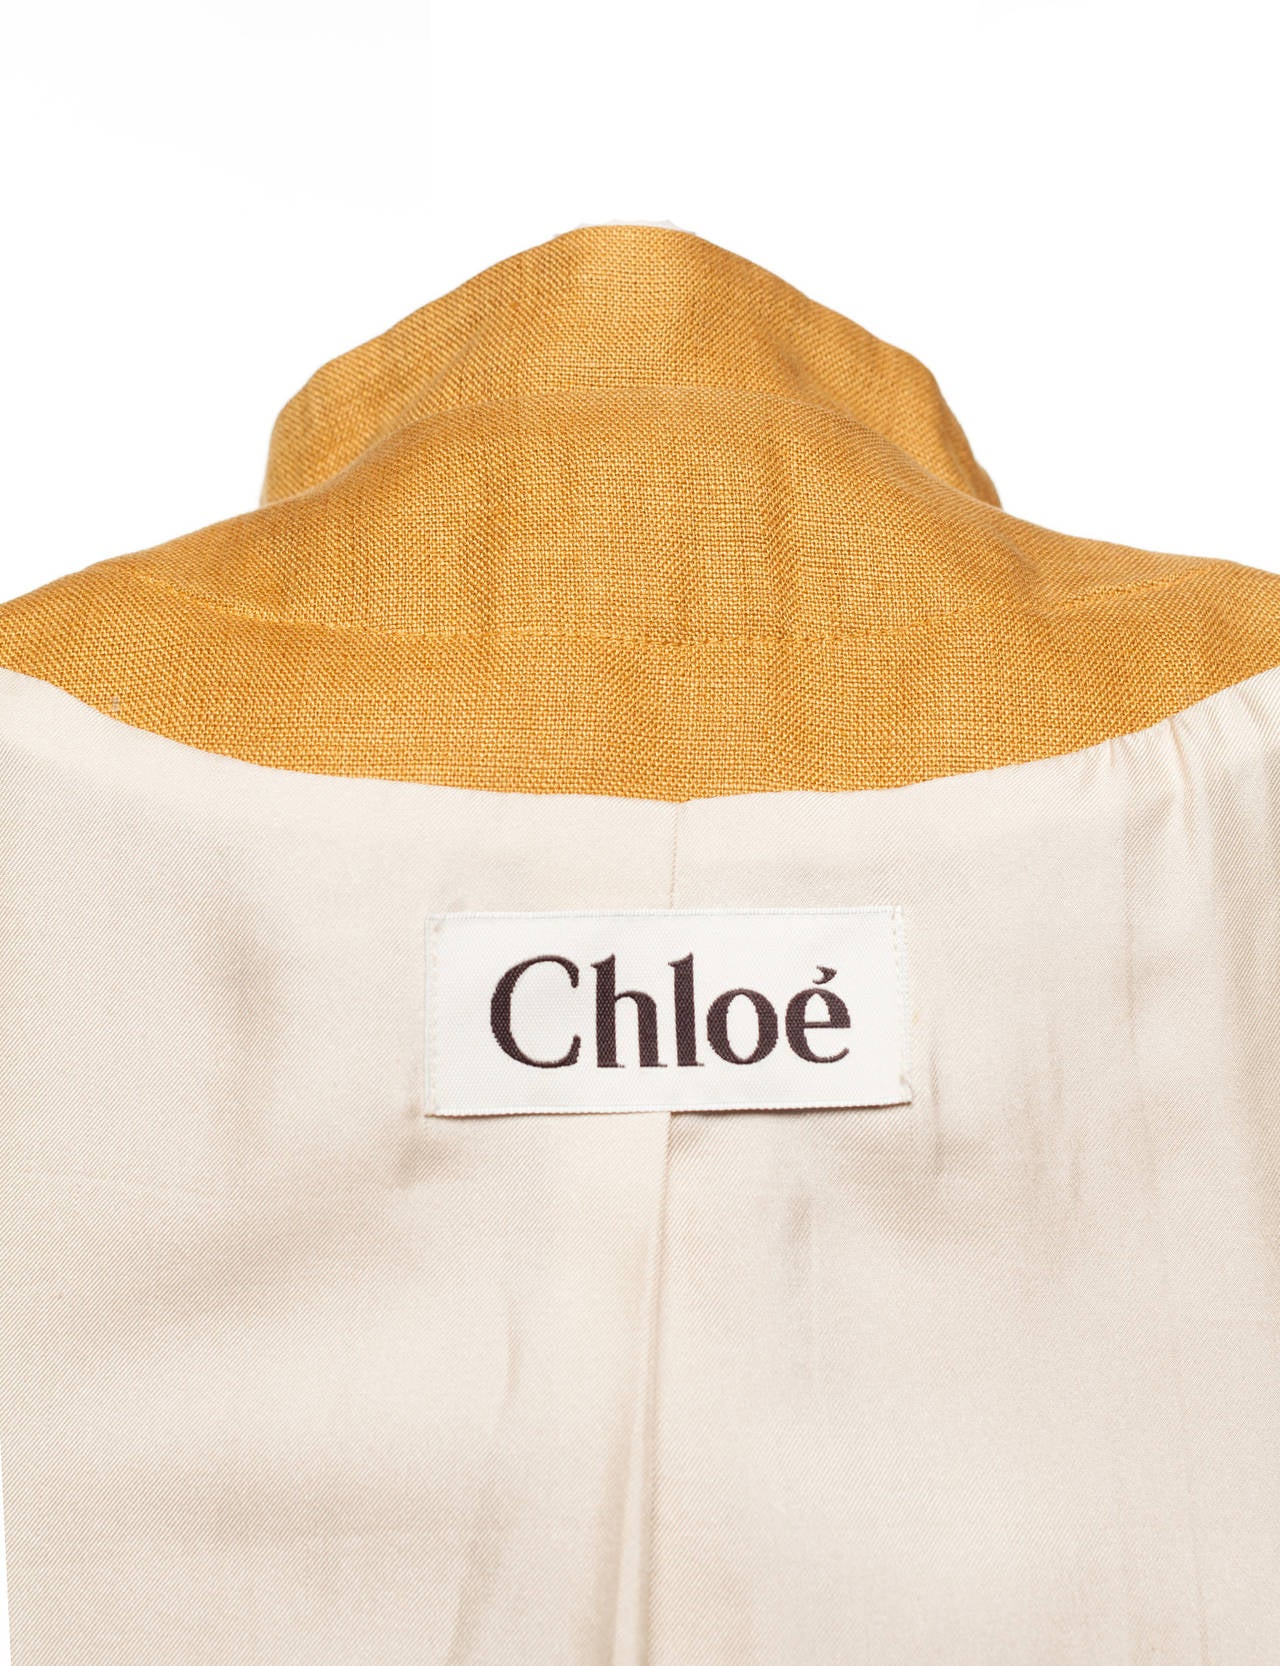 Chloe by Phoebe Philo Mustard linen 60's style coat, Sz. S 3